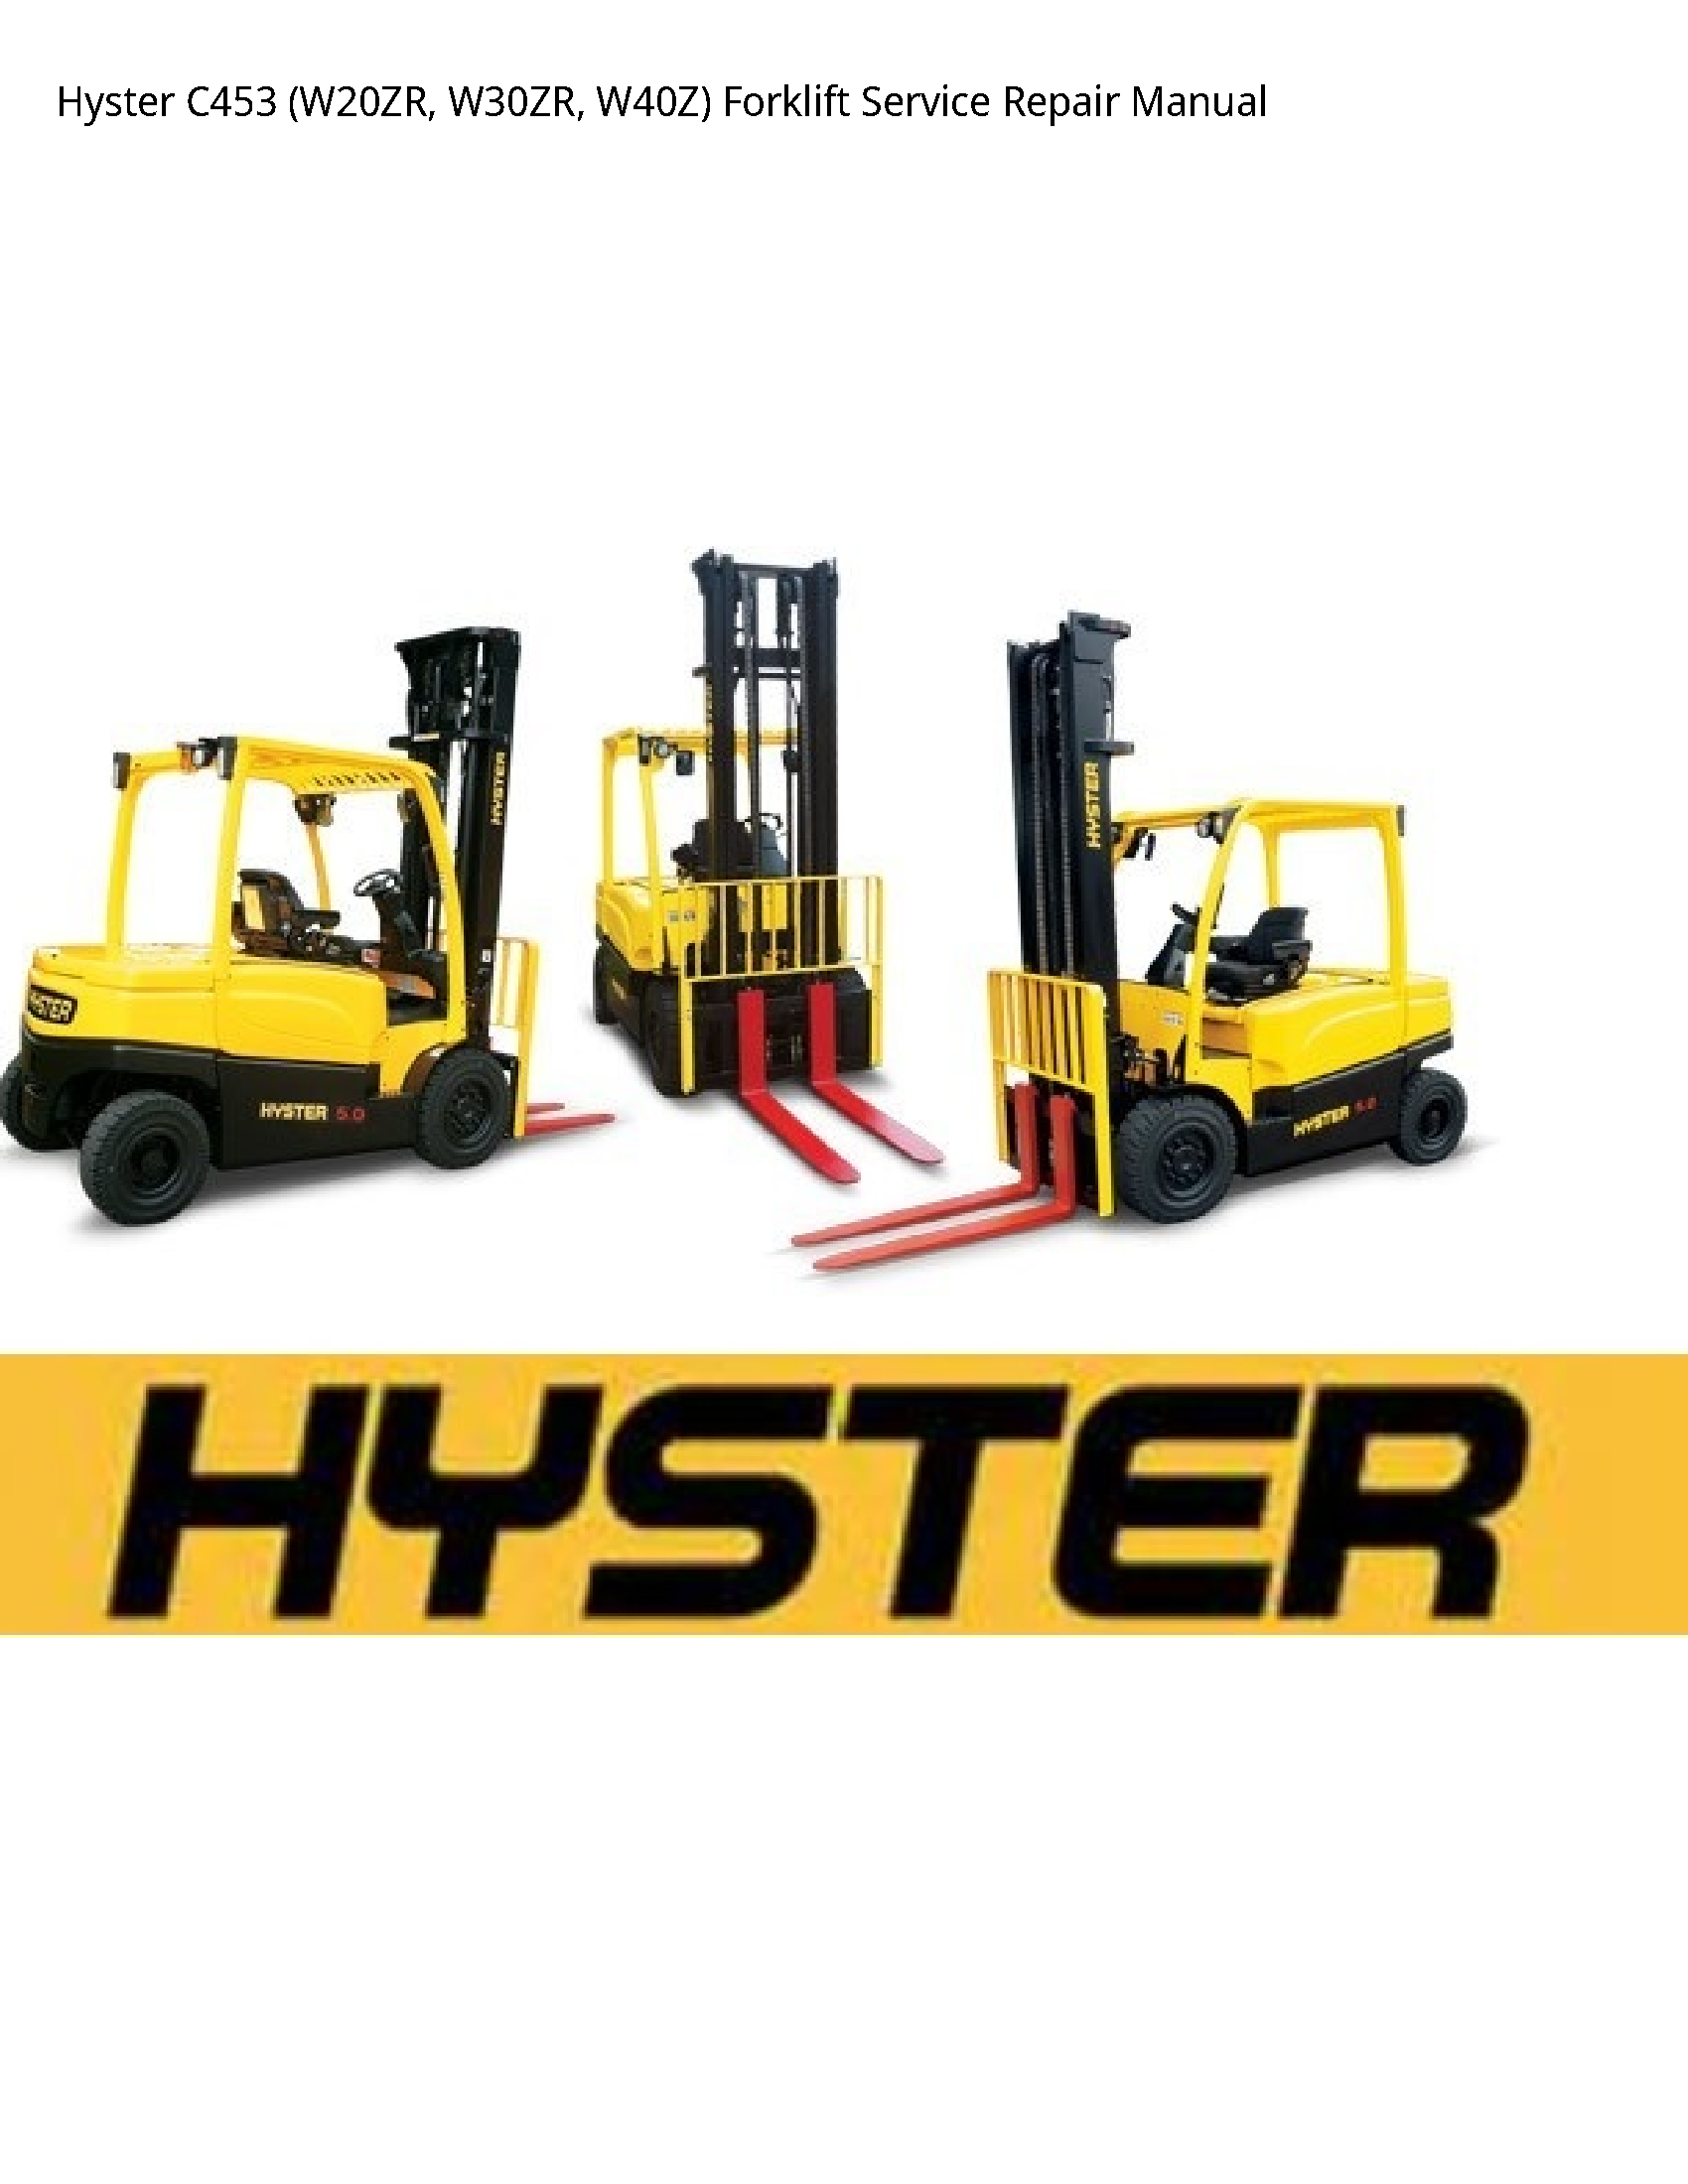 Hyster C453 Forklift manual